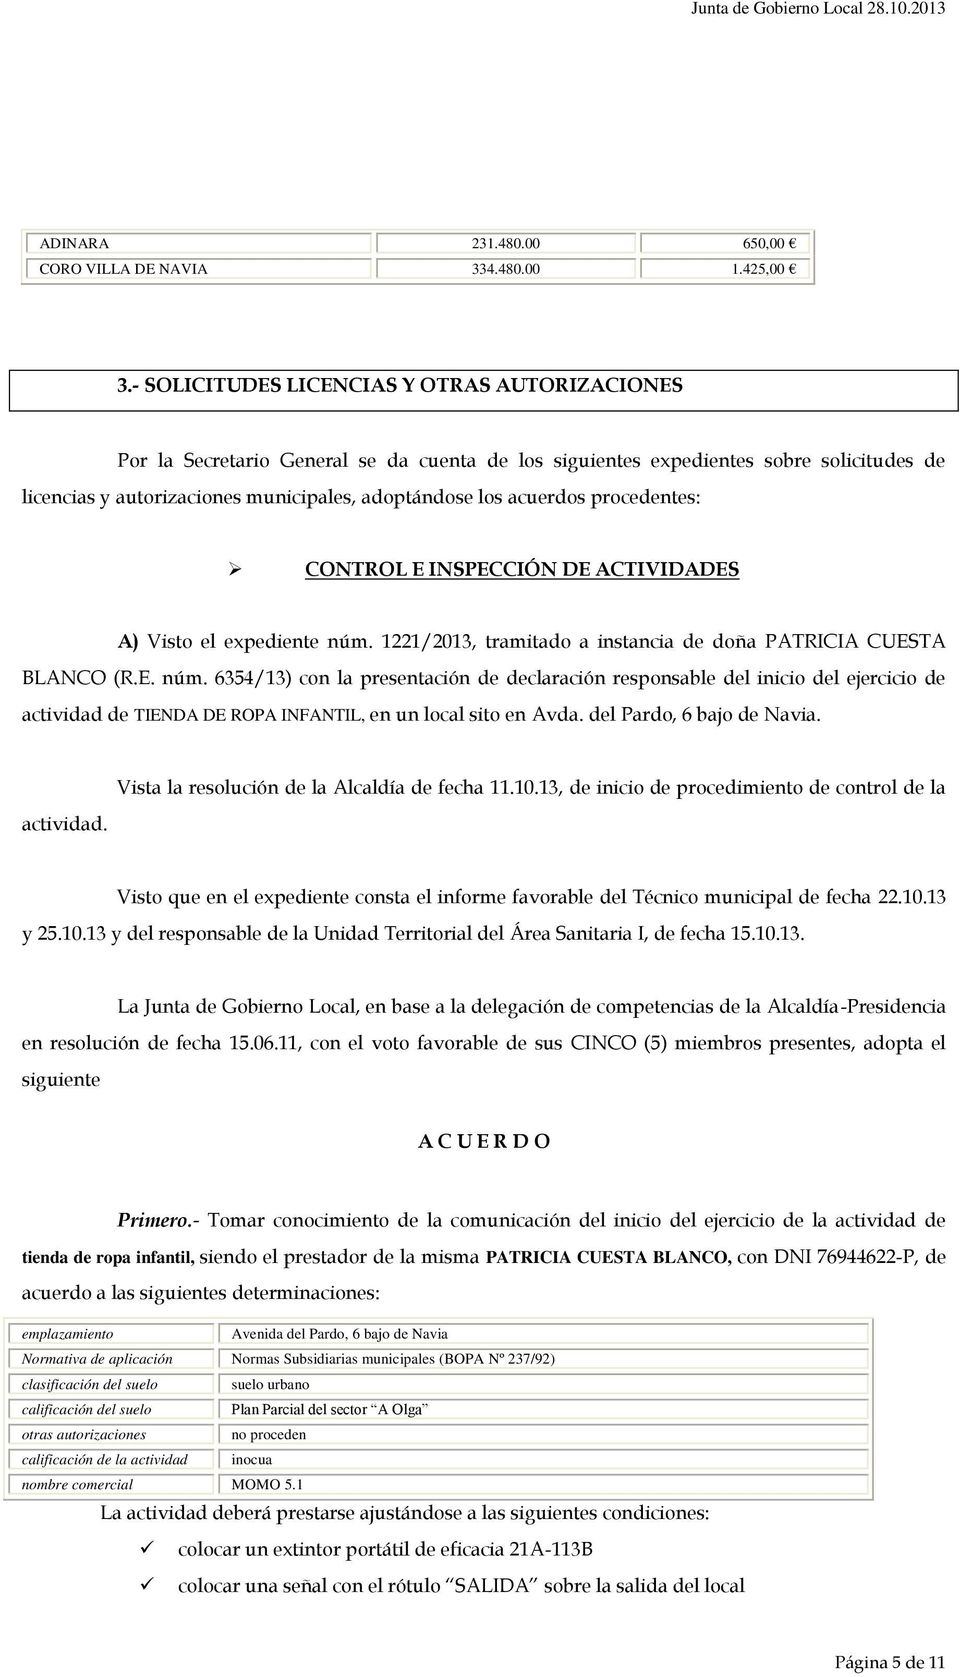 Pardo, 6 bajo de Navia Normativa de aplicación Normas Subsidiarias municipales (BOPA Nº 237/92) clasificación